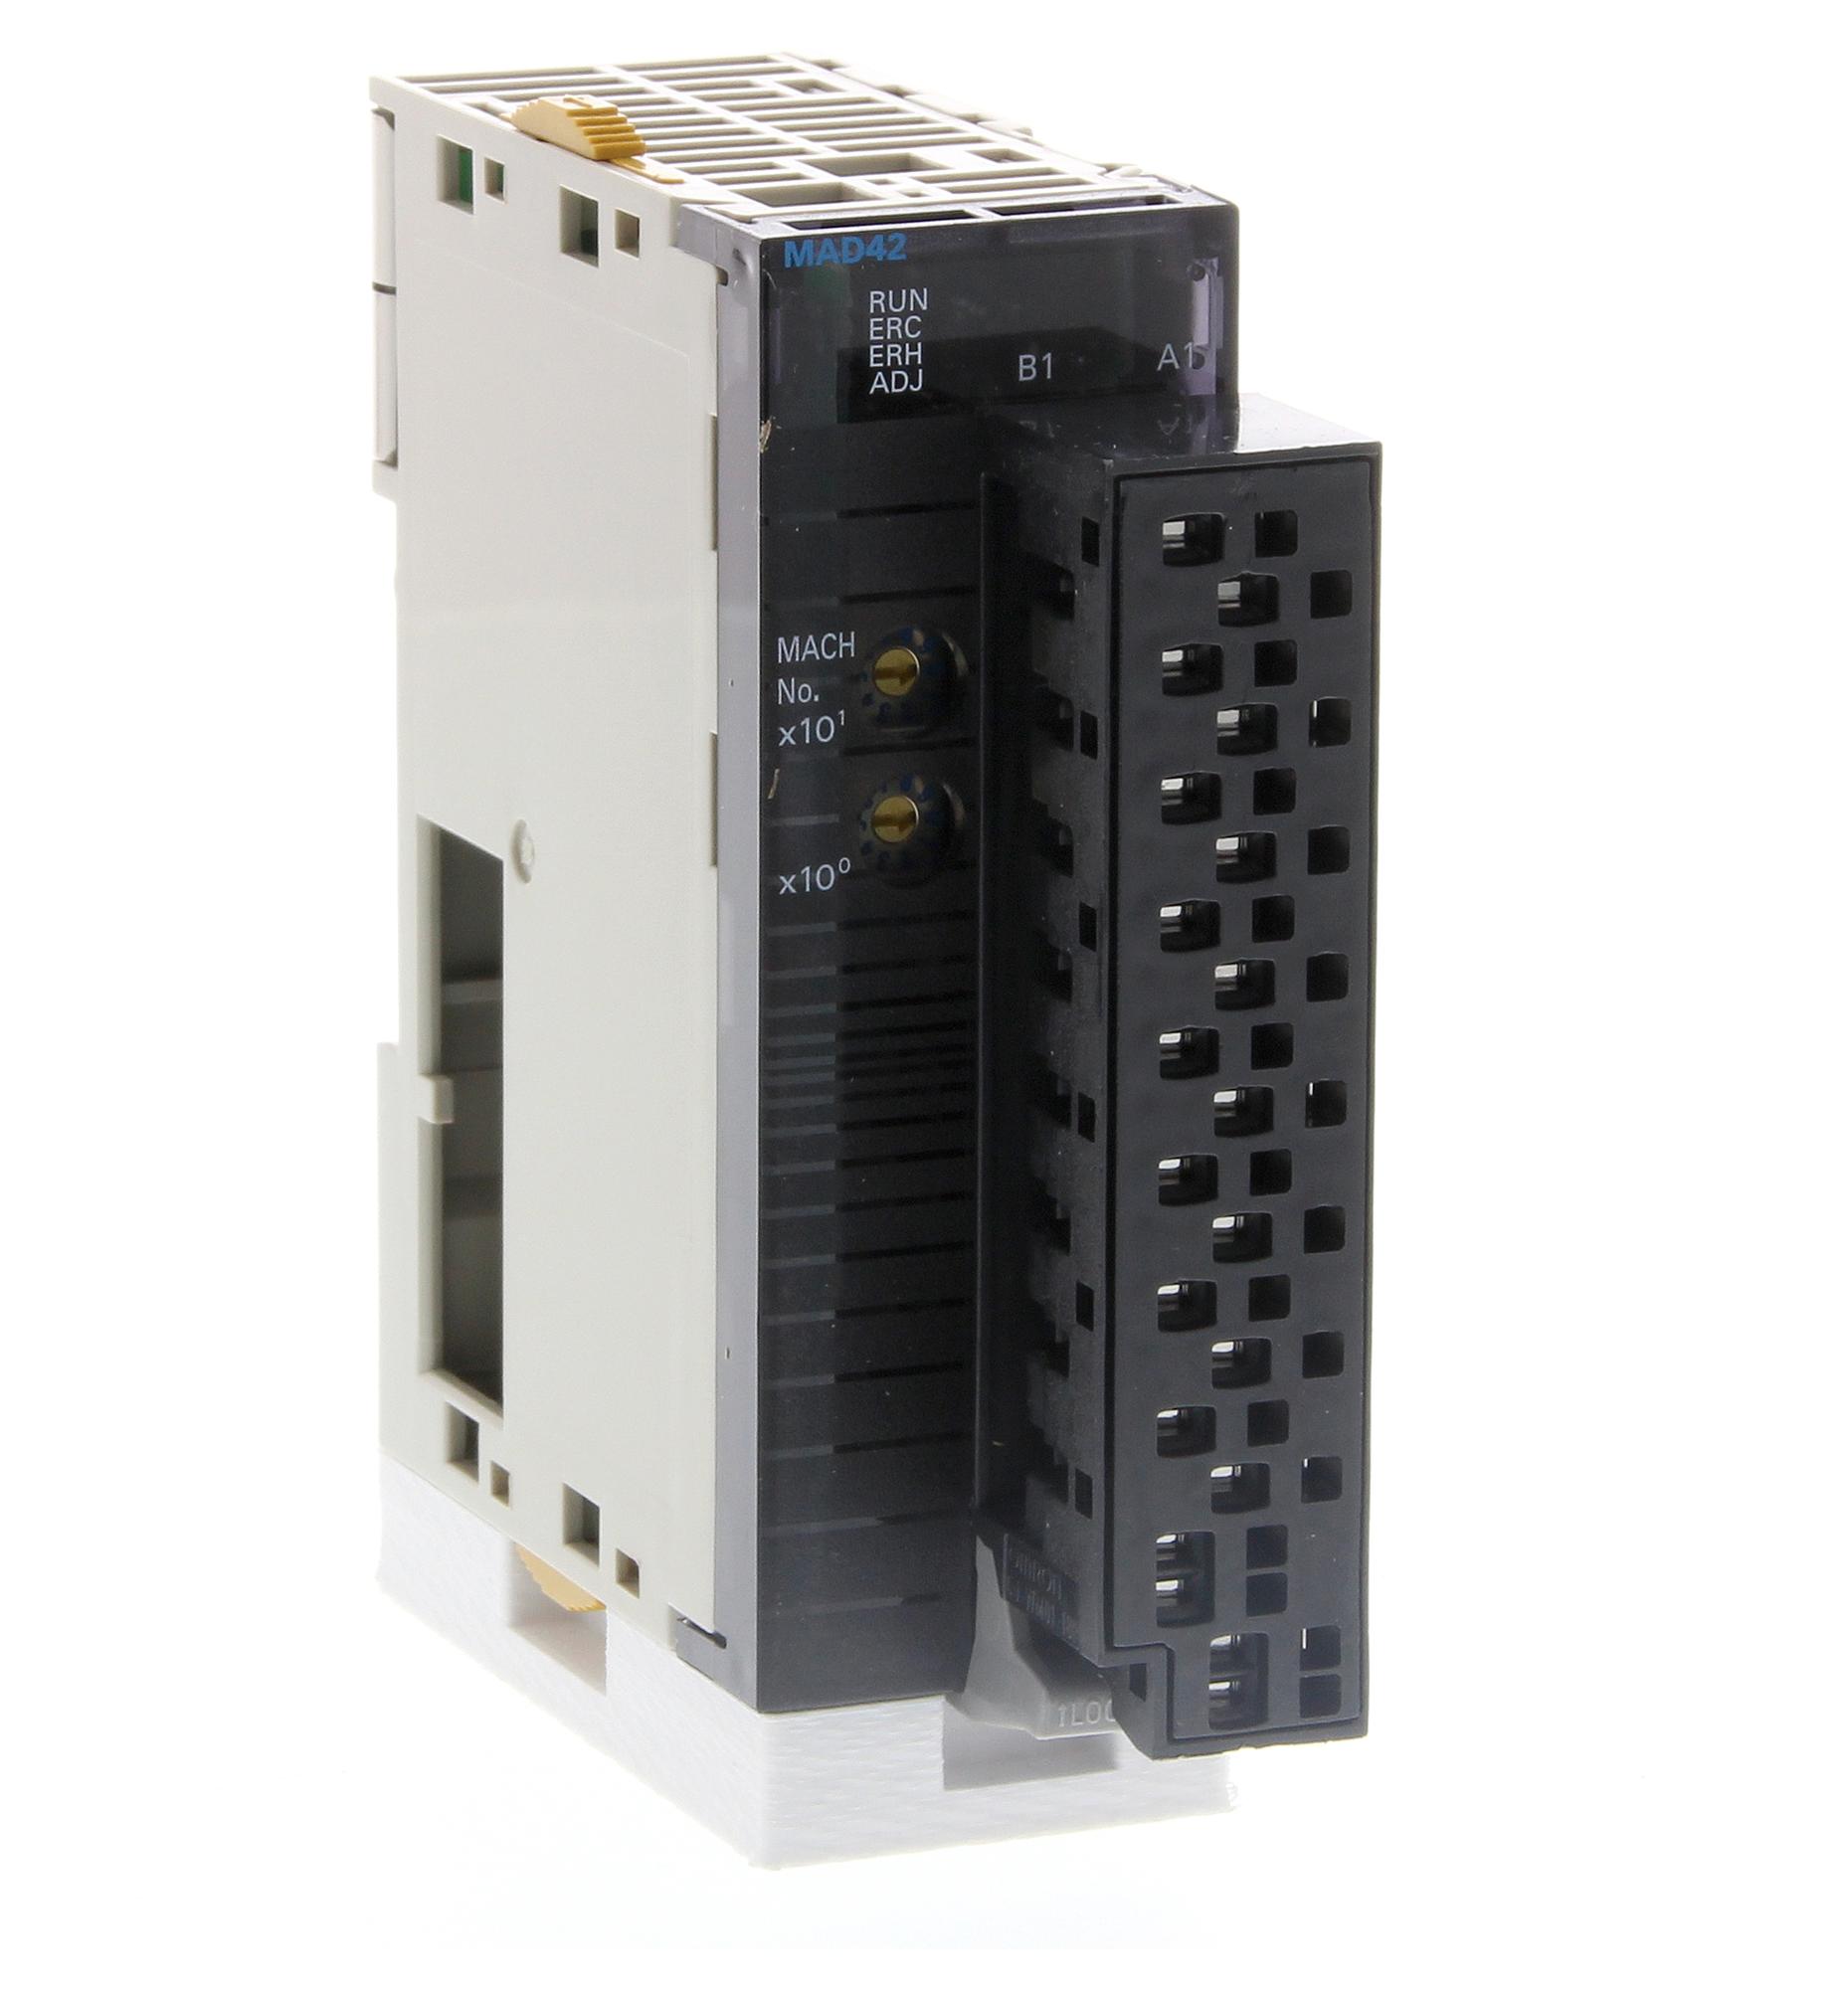 CJ1W-MAD42(SL) ANALOGUE I/O PLC CONTROLLERS OMRON